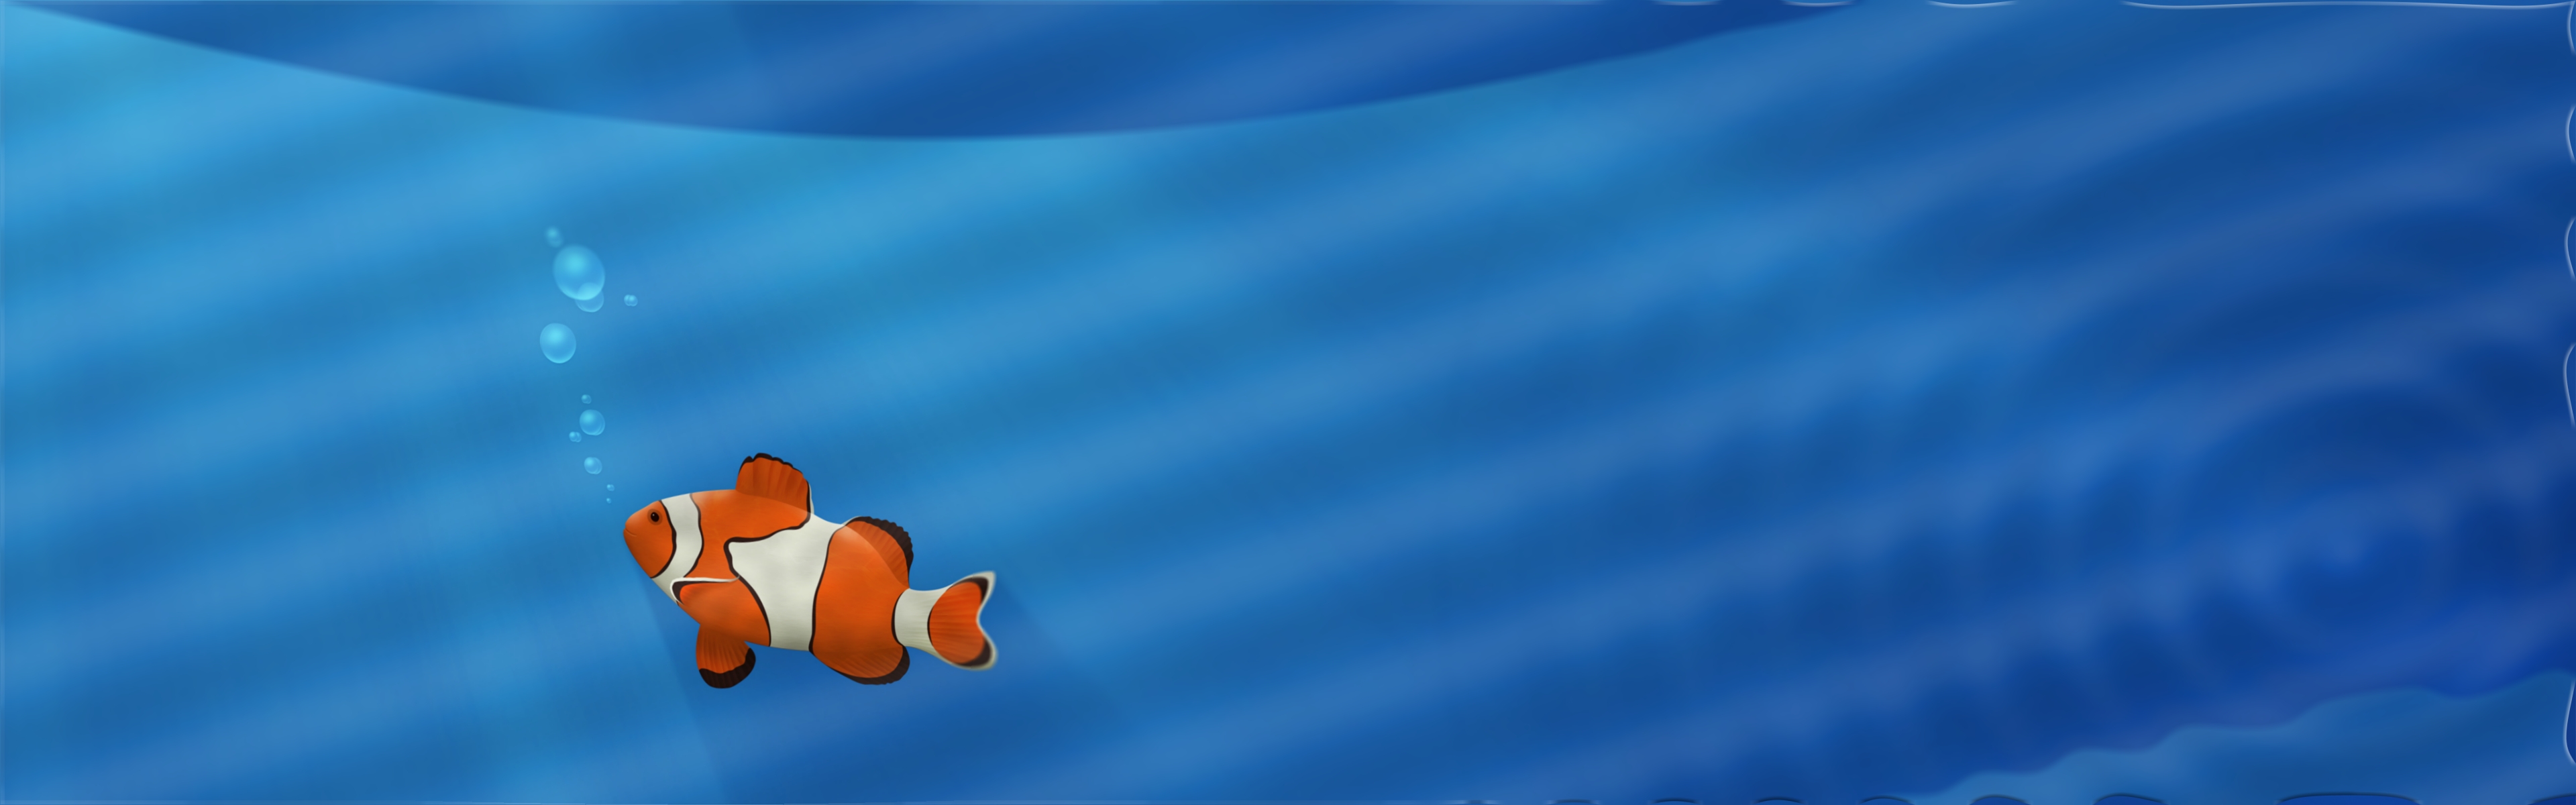 Finding Nemo downloading